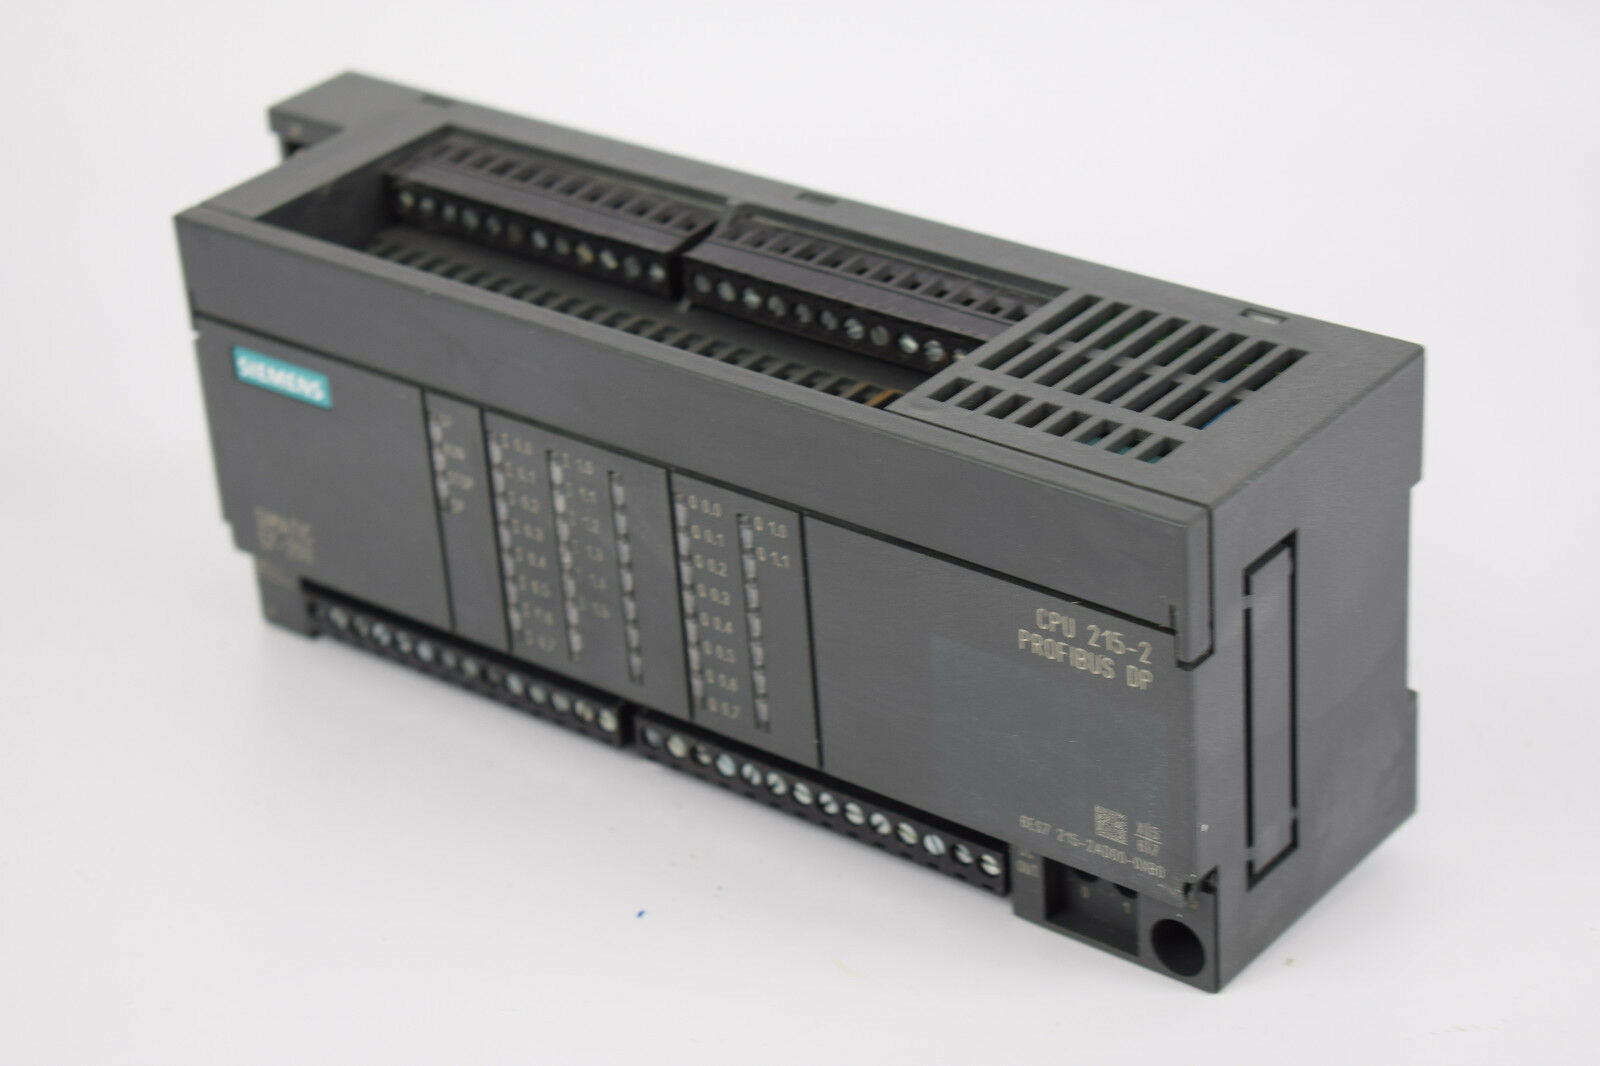 Siemens simatic S7 CPU 215-2 6ES7 215-2AD00-0XB0 ( 6ES7215-2AD00-0XB0 ) E4